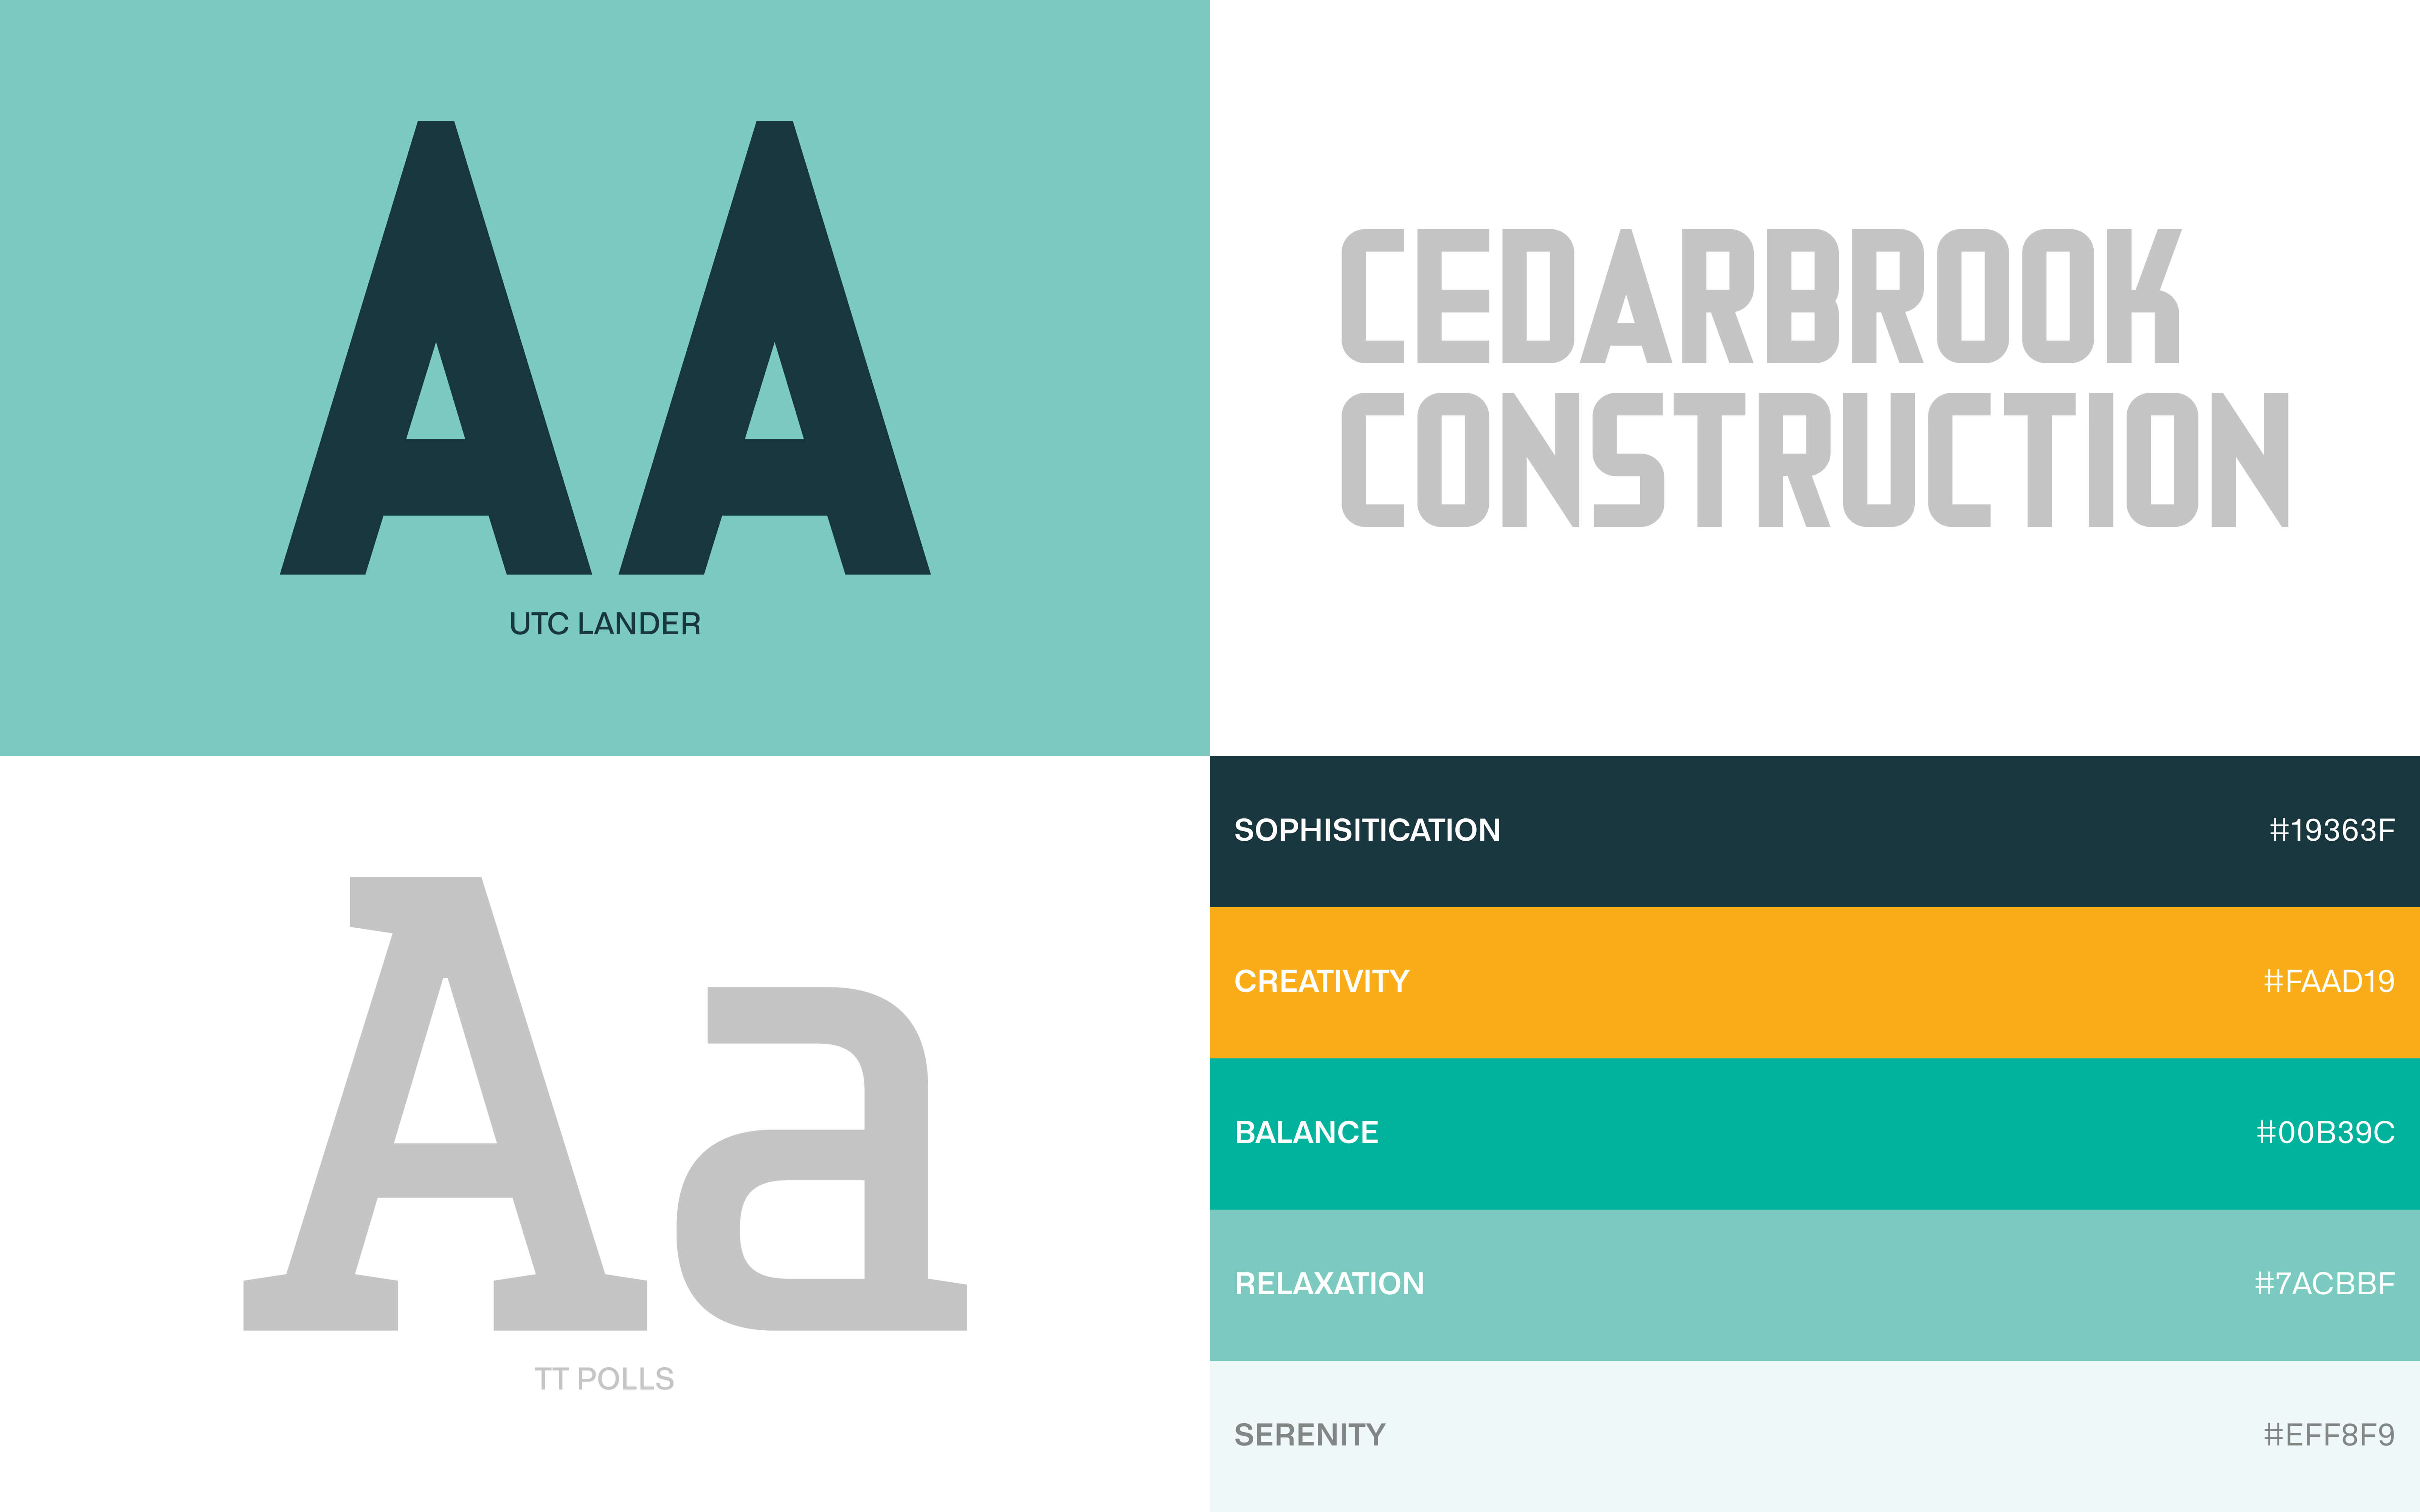 Cedarbrook Construction Branding Components